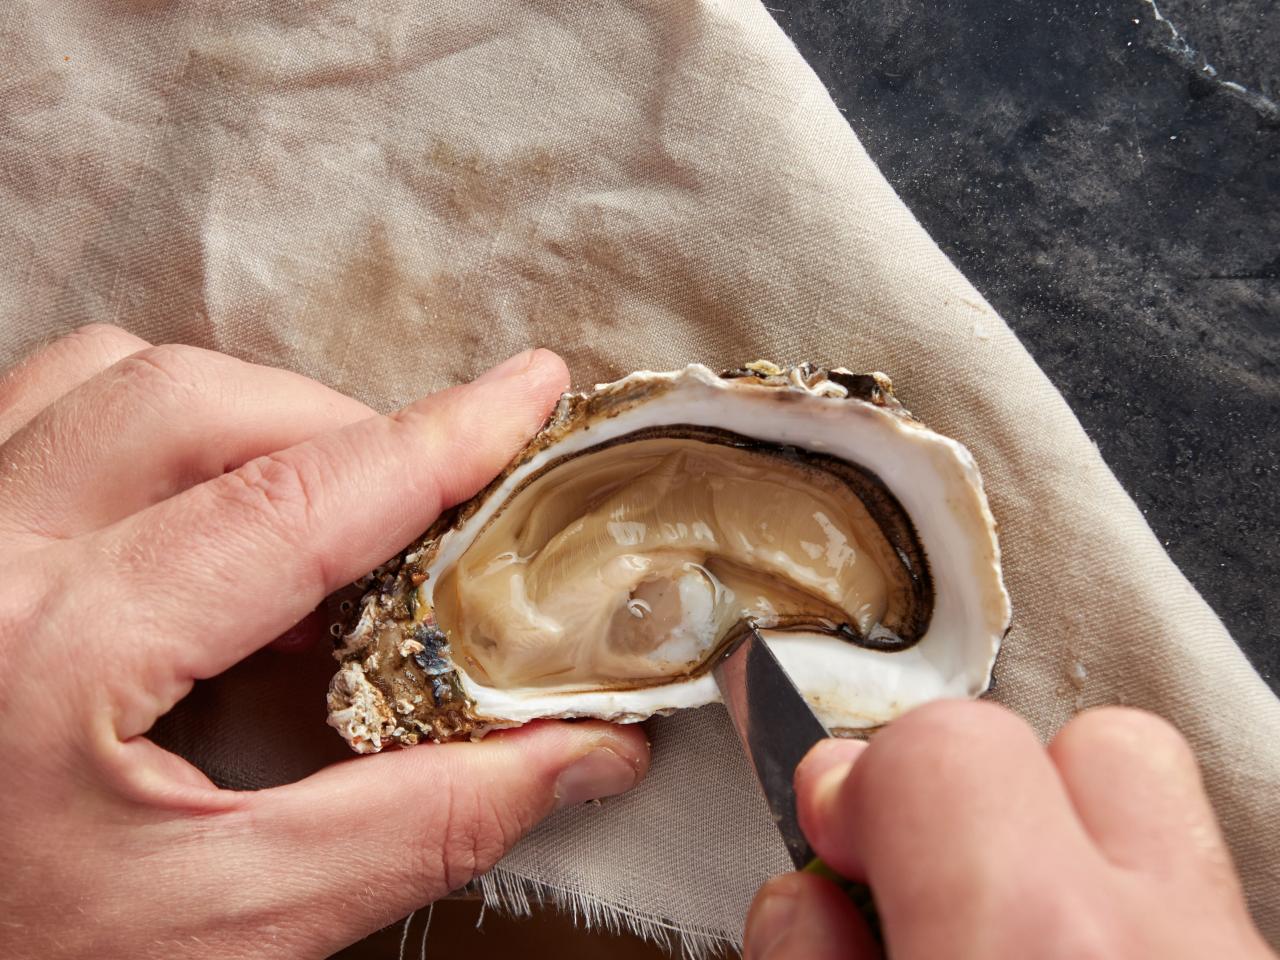 https://food.fnr.sndimg.com/content/dam/images/food/fullset/2021/12/15/oyster-opening-knife-hand-cutting-bottom-adductor-muscle-linen.jpg.rend.hgtvcom.1280.960.suffix/1639598353215.jpeg